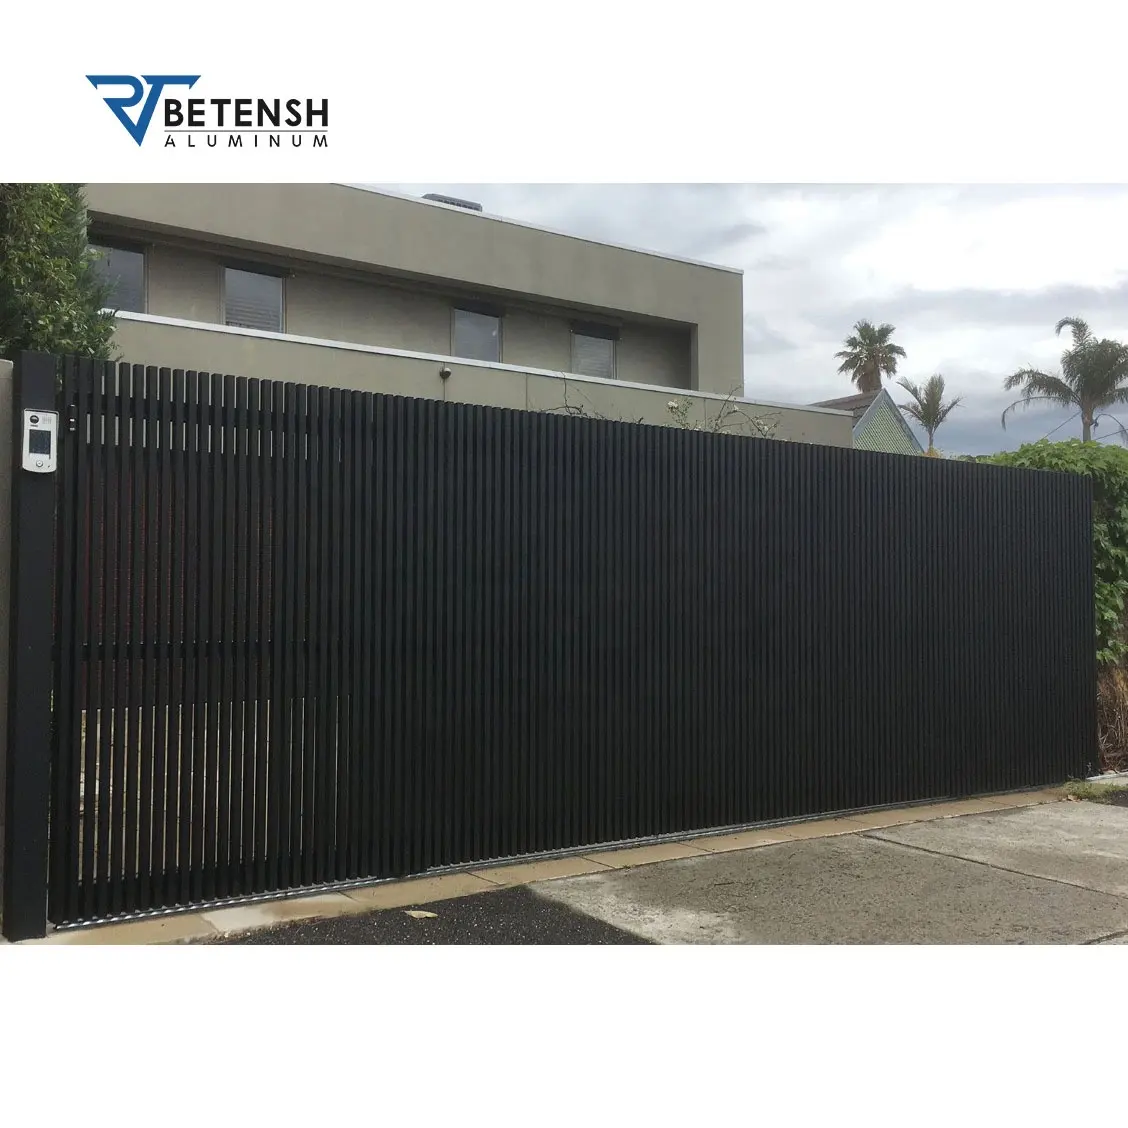 Moderne Privacy Metalen Gating Aluminium Gates Aluminium Oprit Hekken Gate Voor Uw Tuin